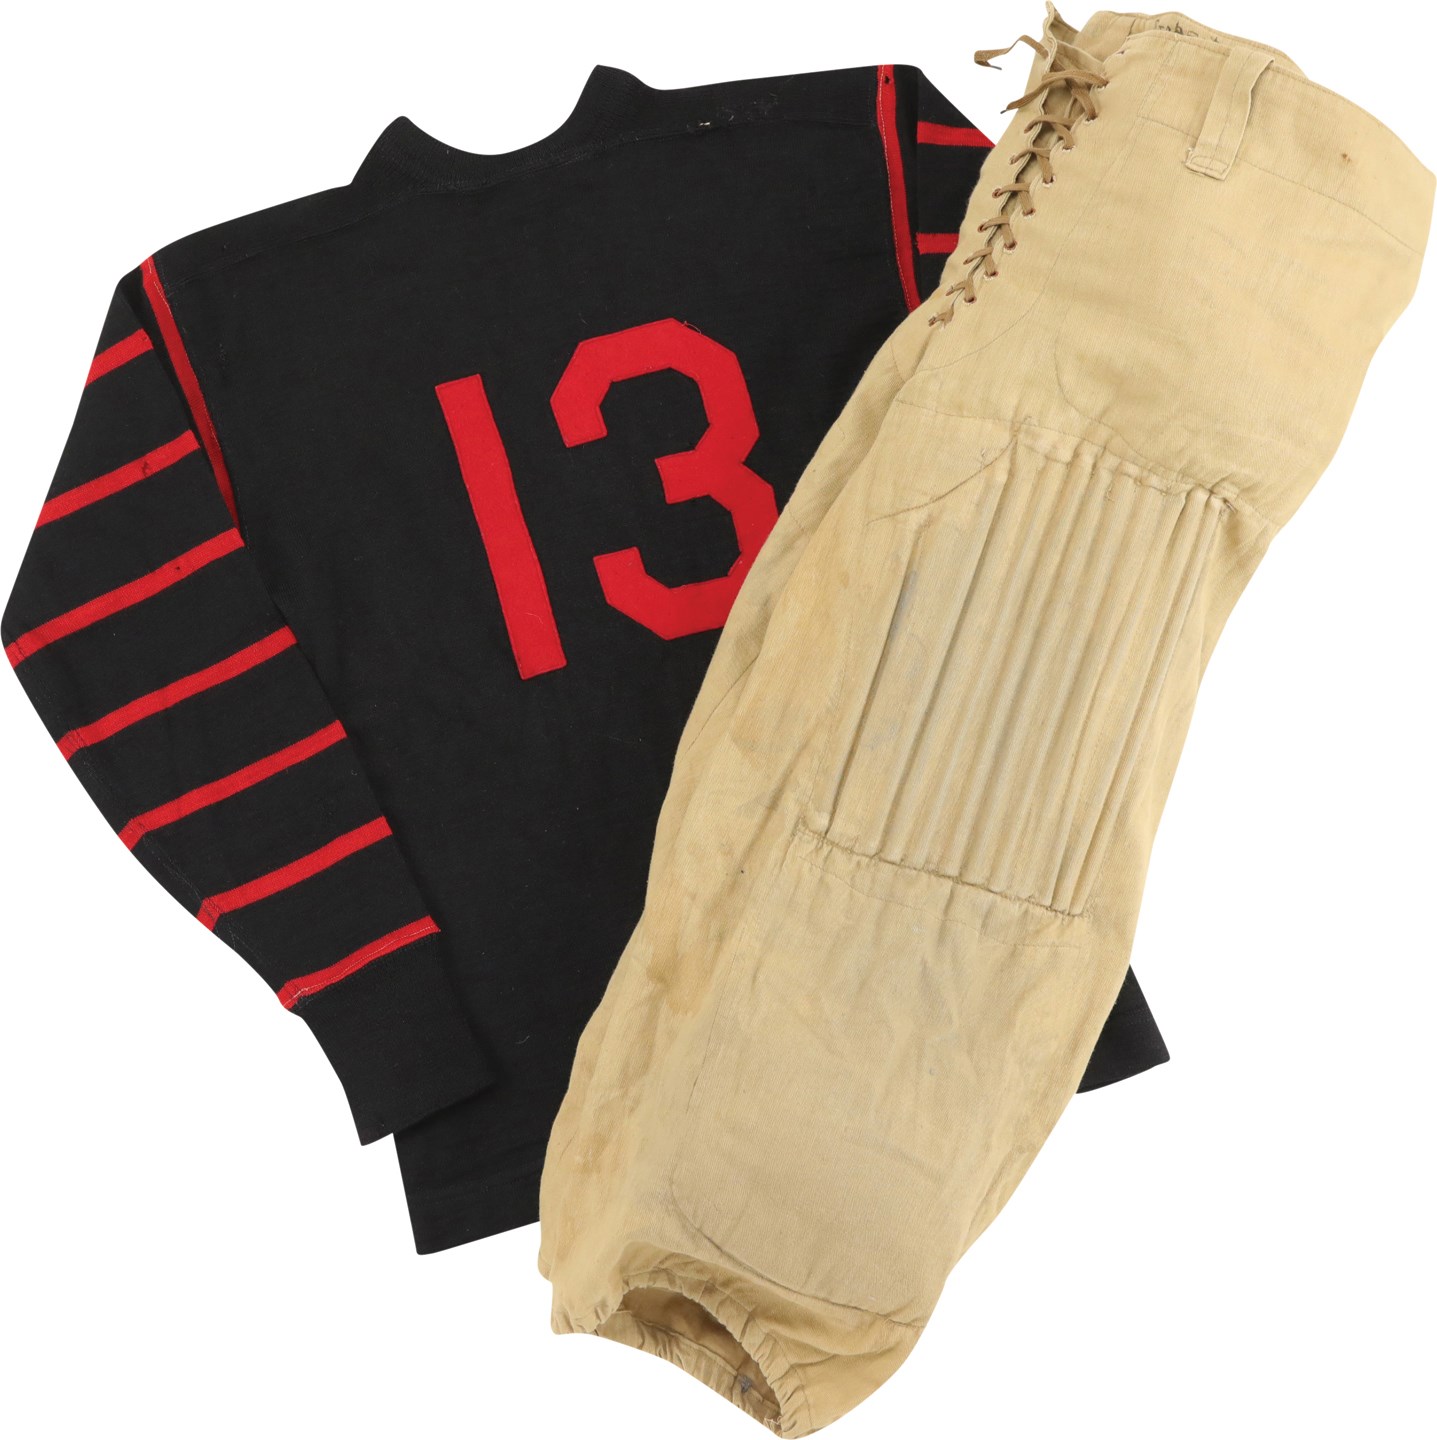 Scarce Circa Early 1900s Spalding "Bumble Bee" Football Jersey & "Slat" Pants